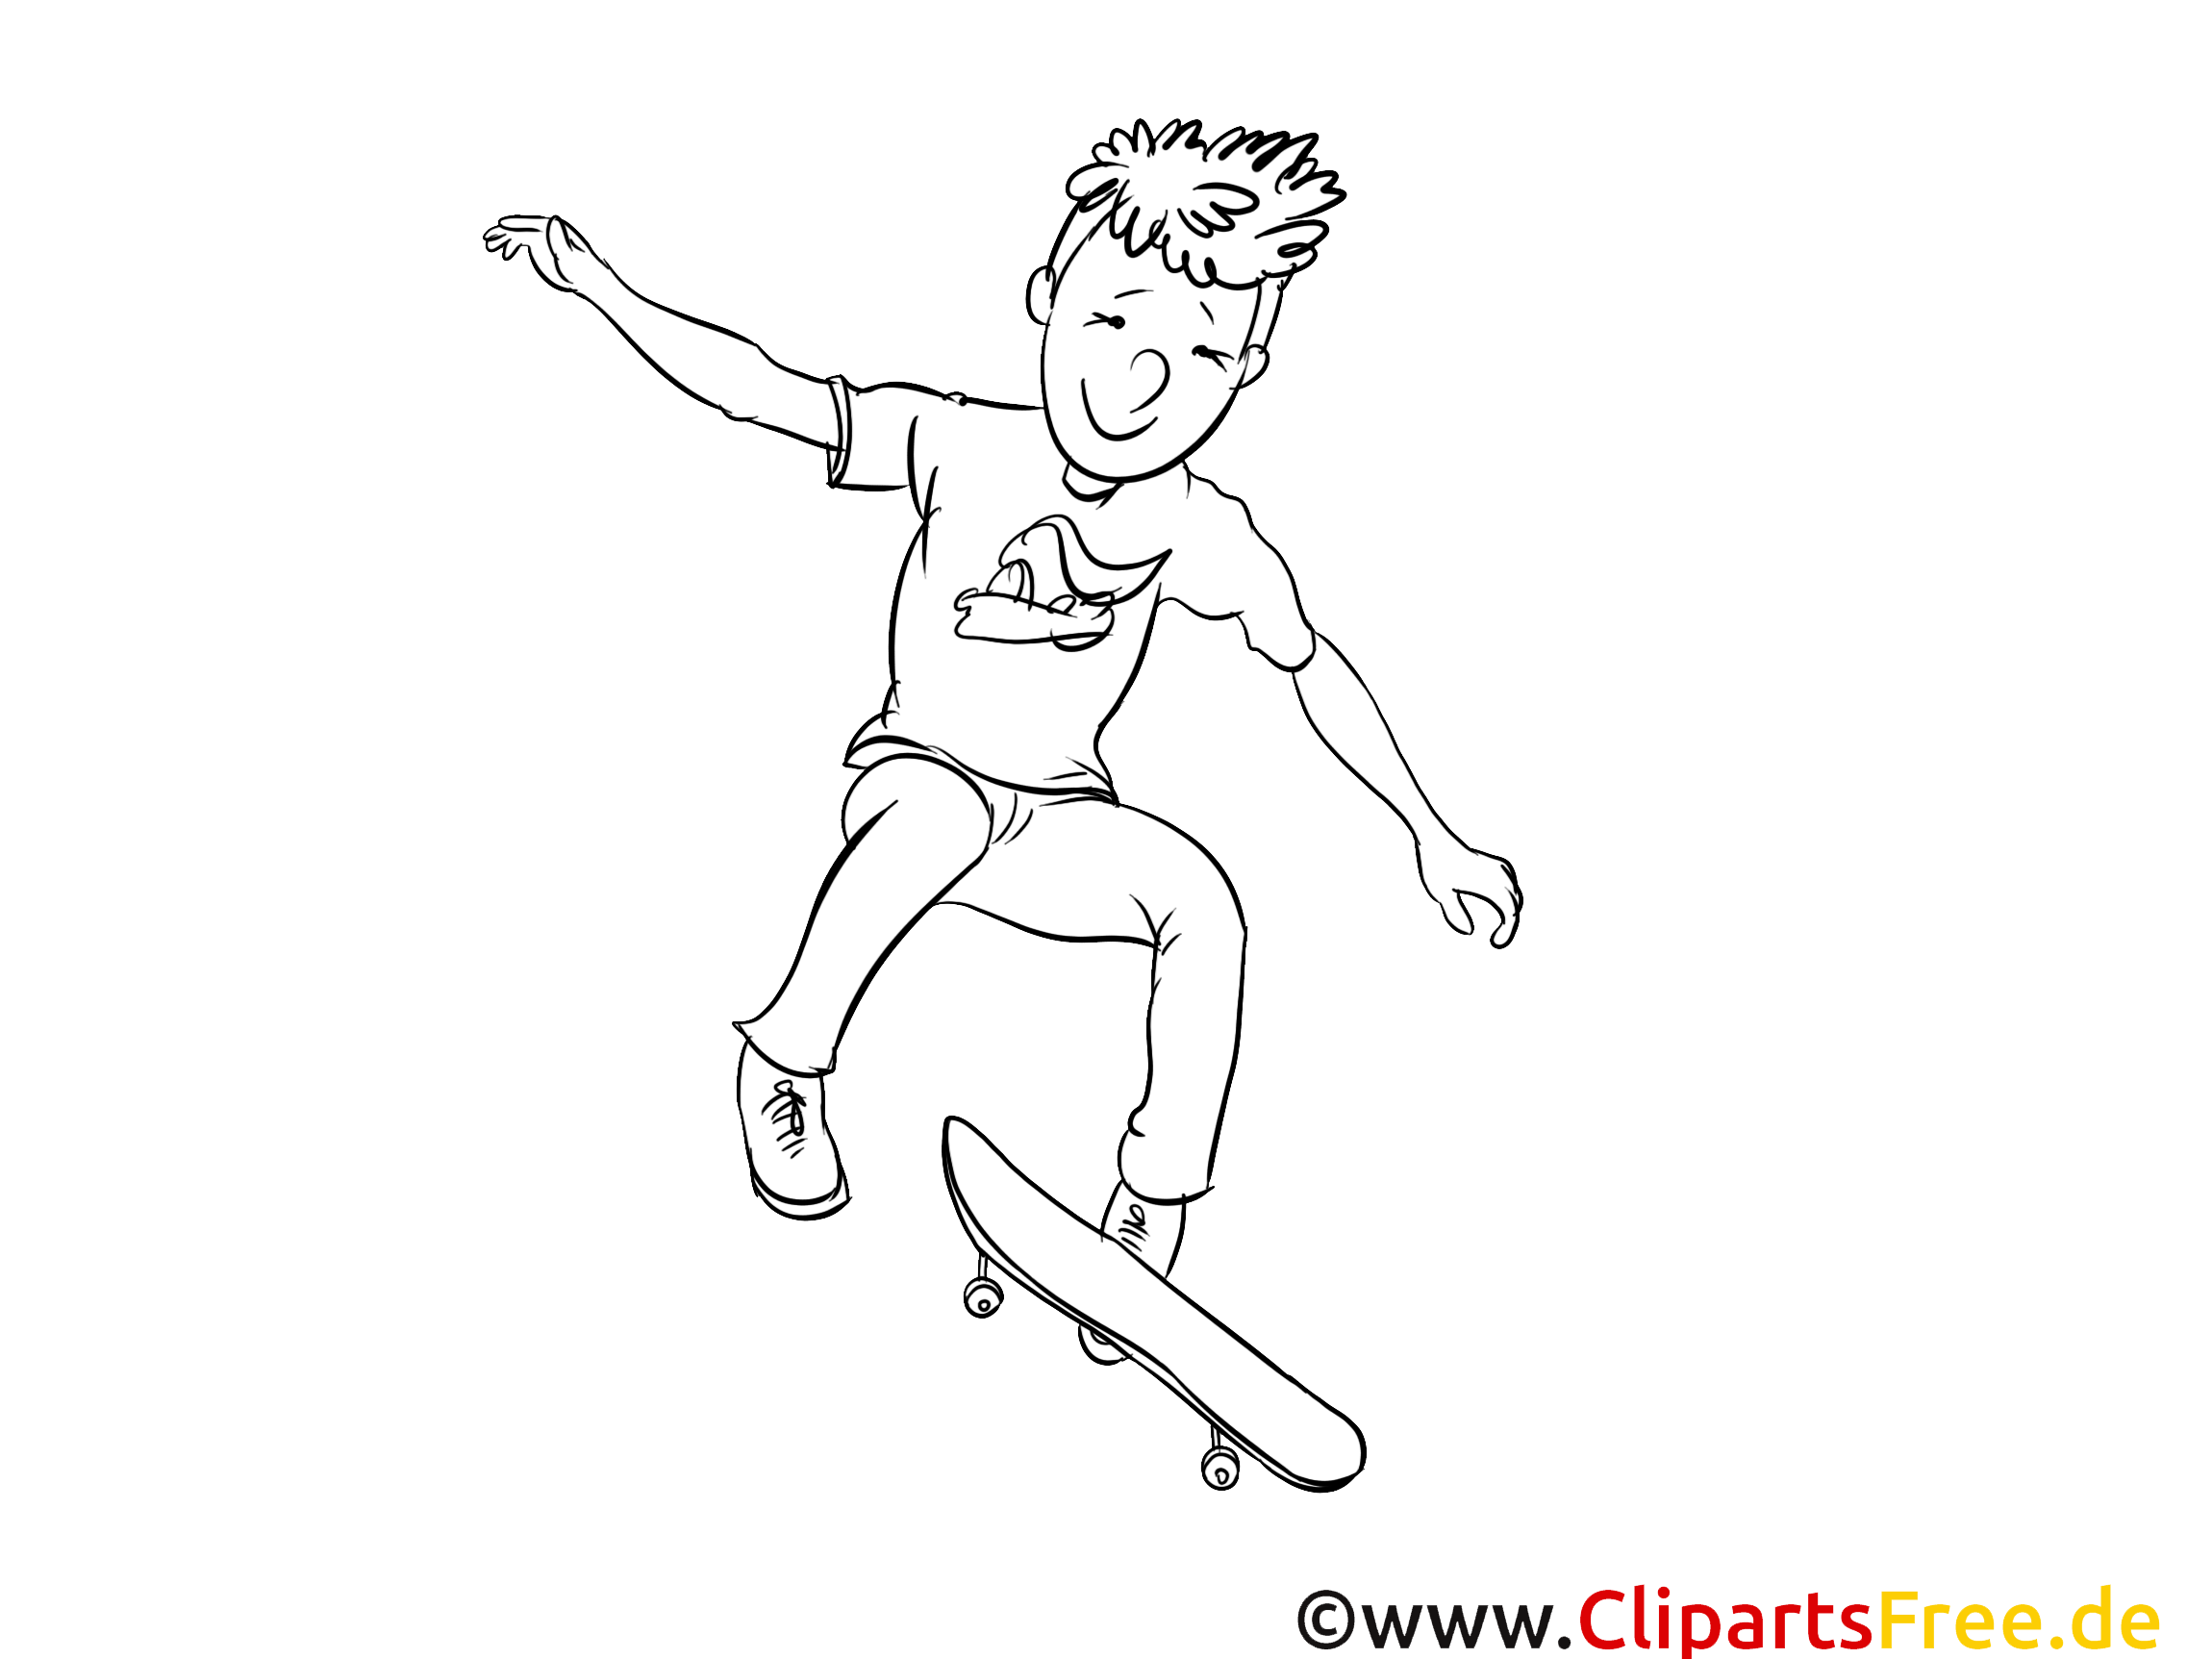 Skateboard images – Sport gratuits à imprimer